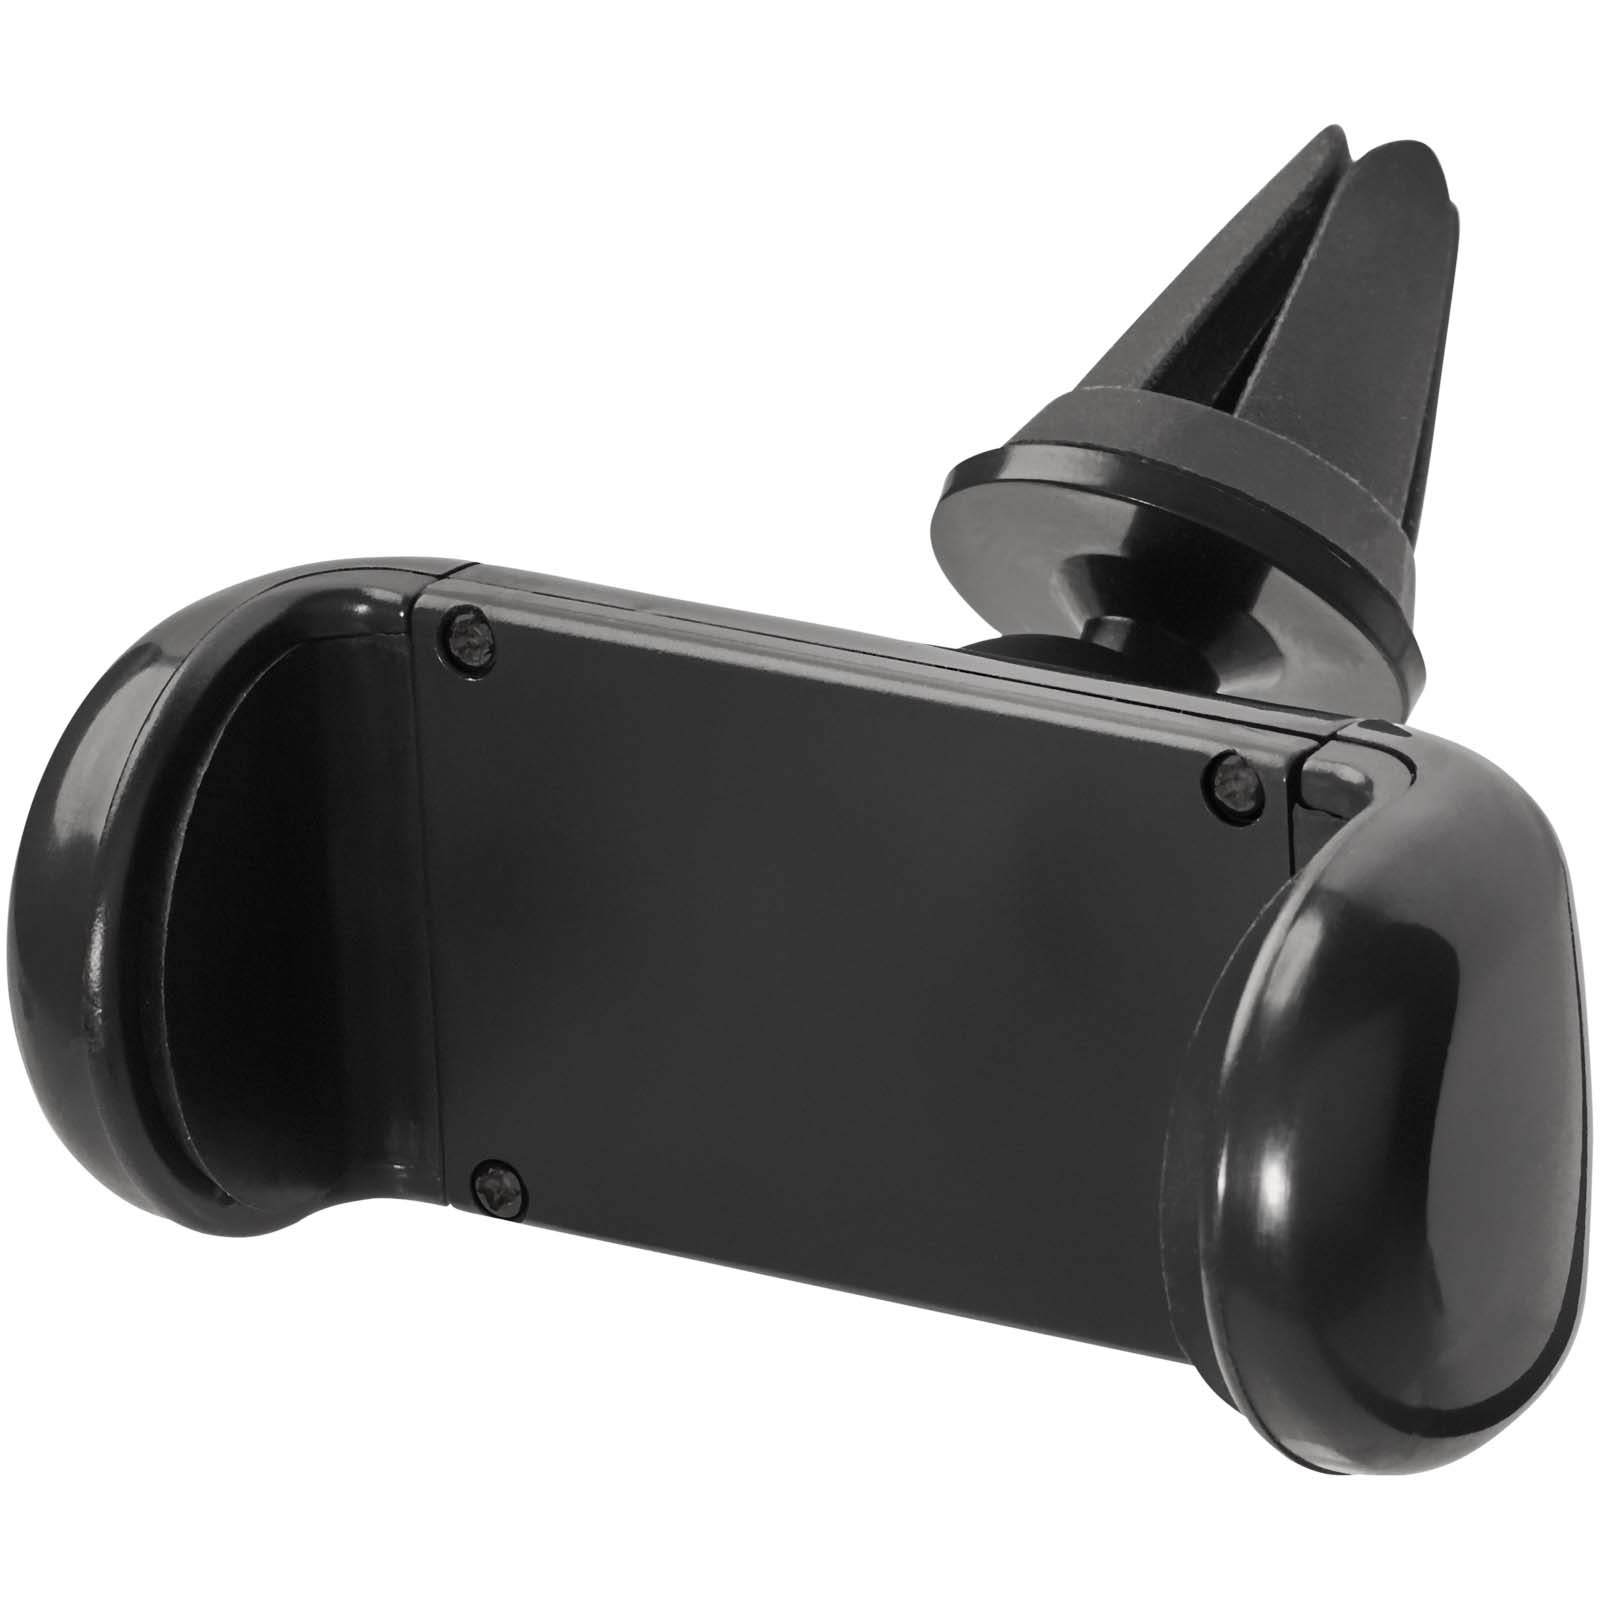 Technology - Grip car phone holder